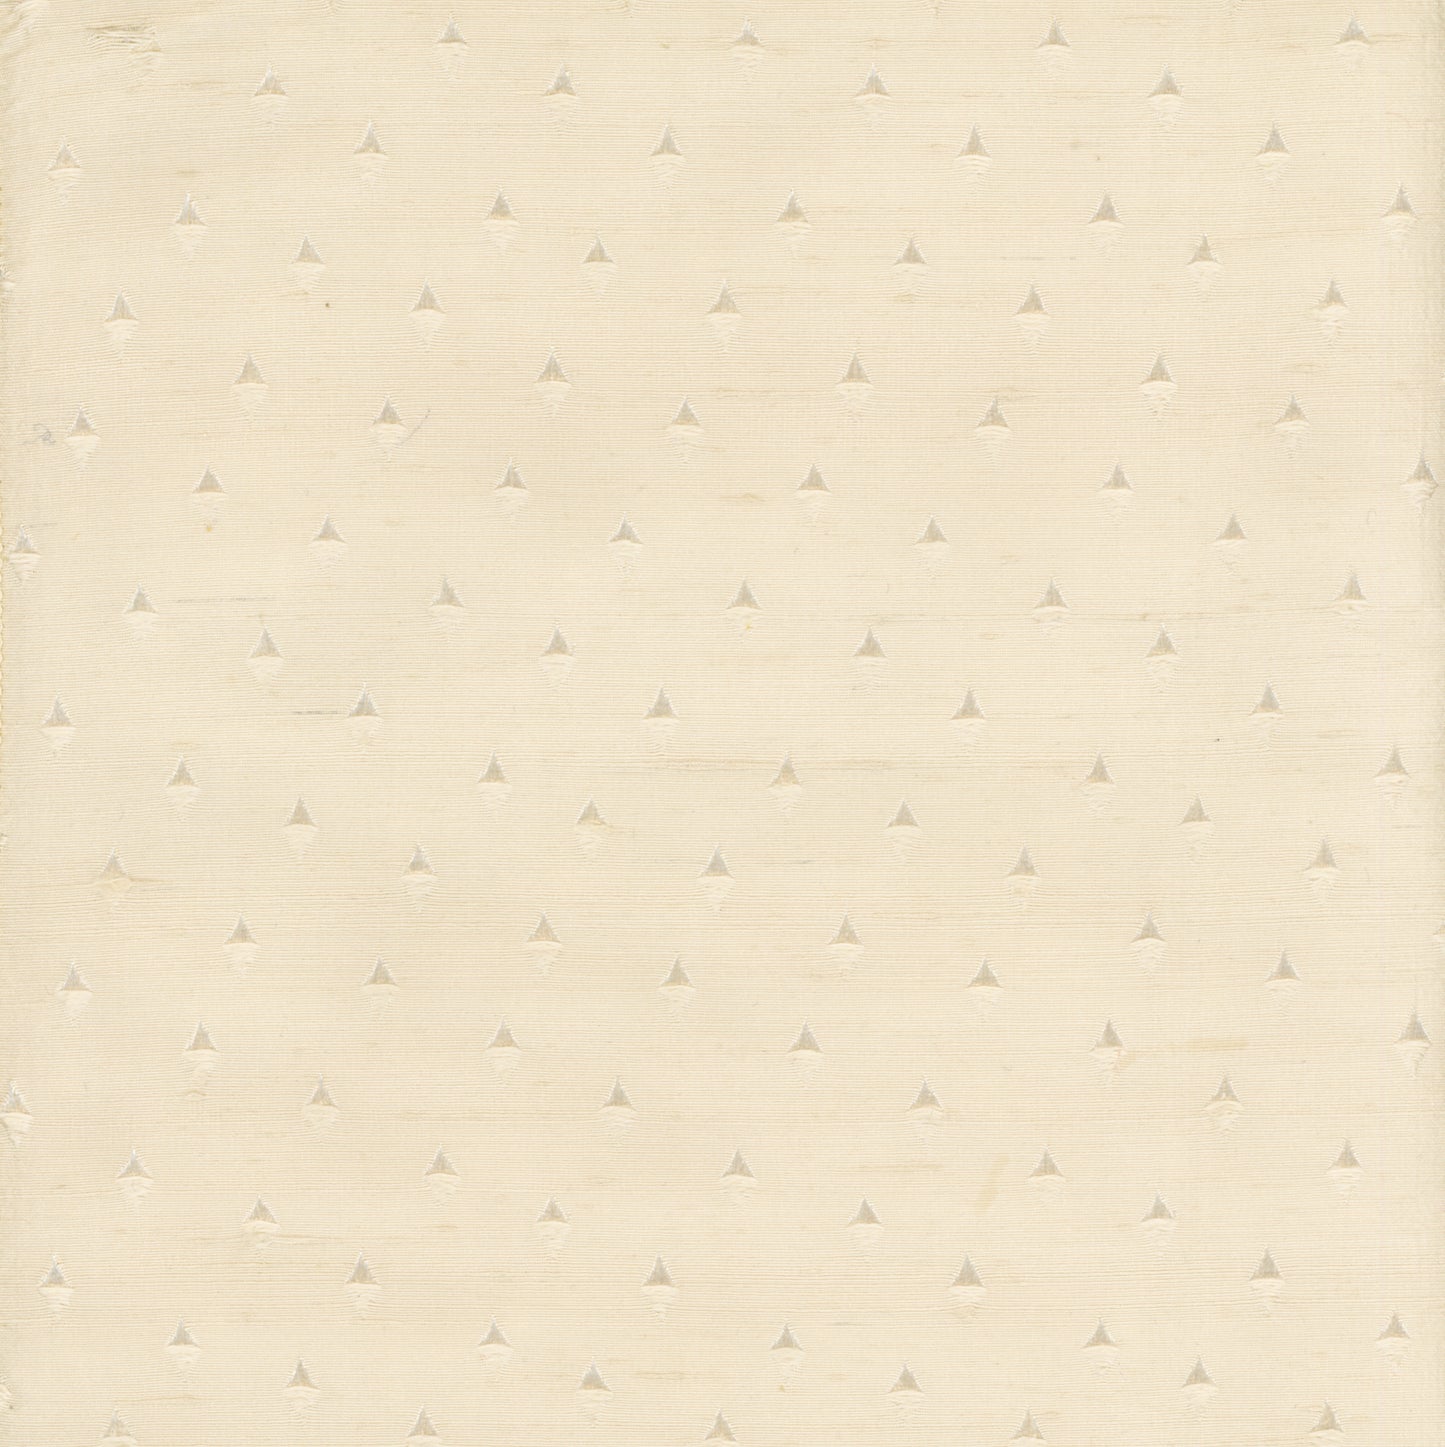 cream colored fabric with small woven triangles